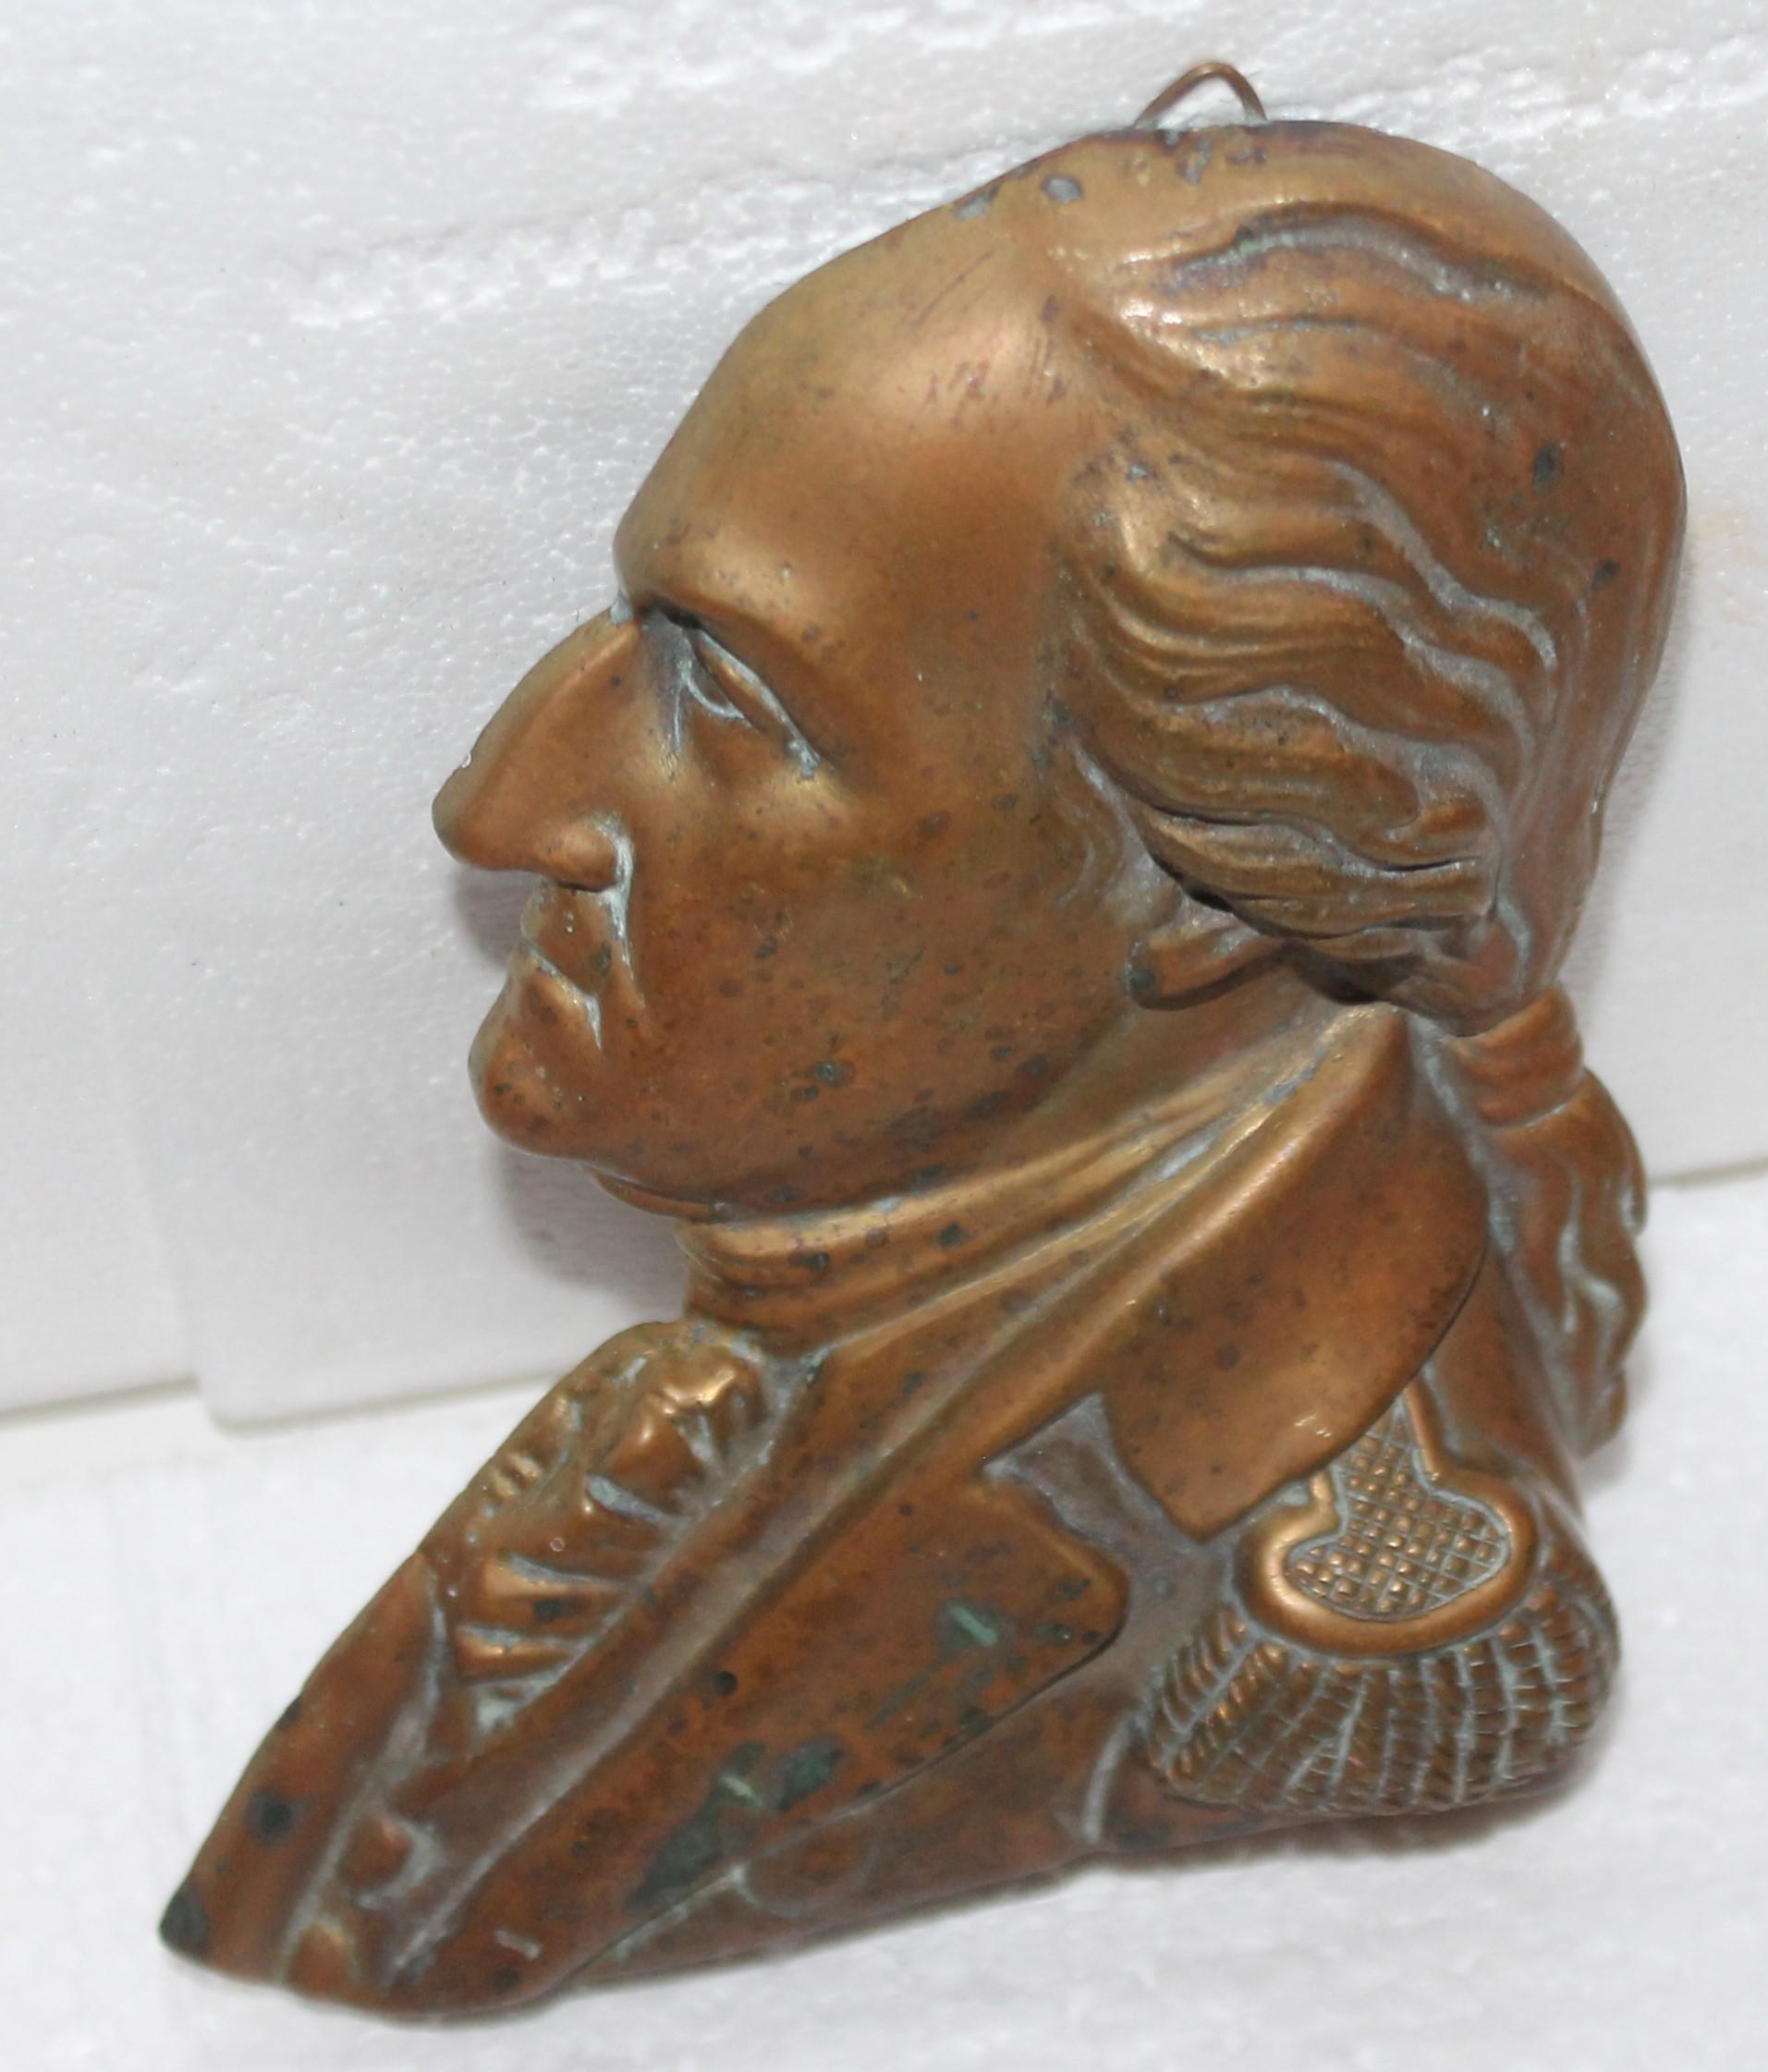 Late 19th century bronze patinaed George Washington hanging plaque.